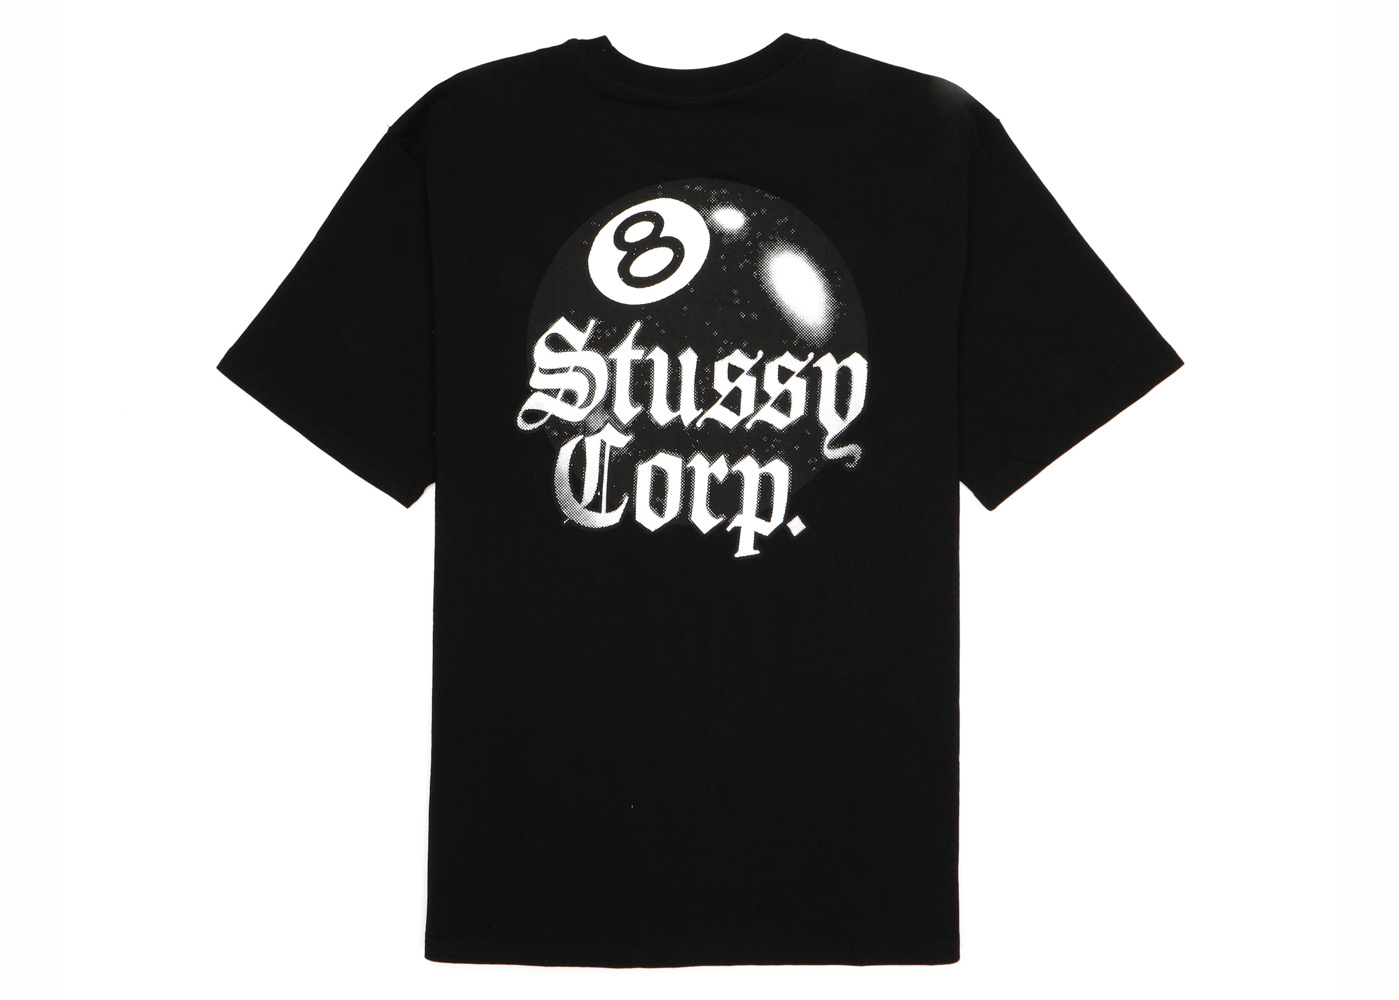 Stussy 8 Ball Corp. Tee Black - SS23 - US